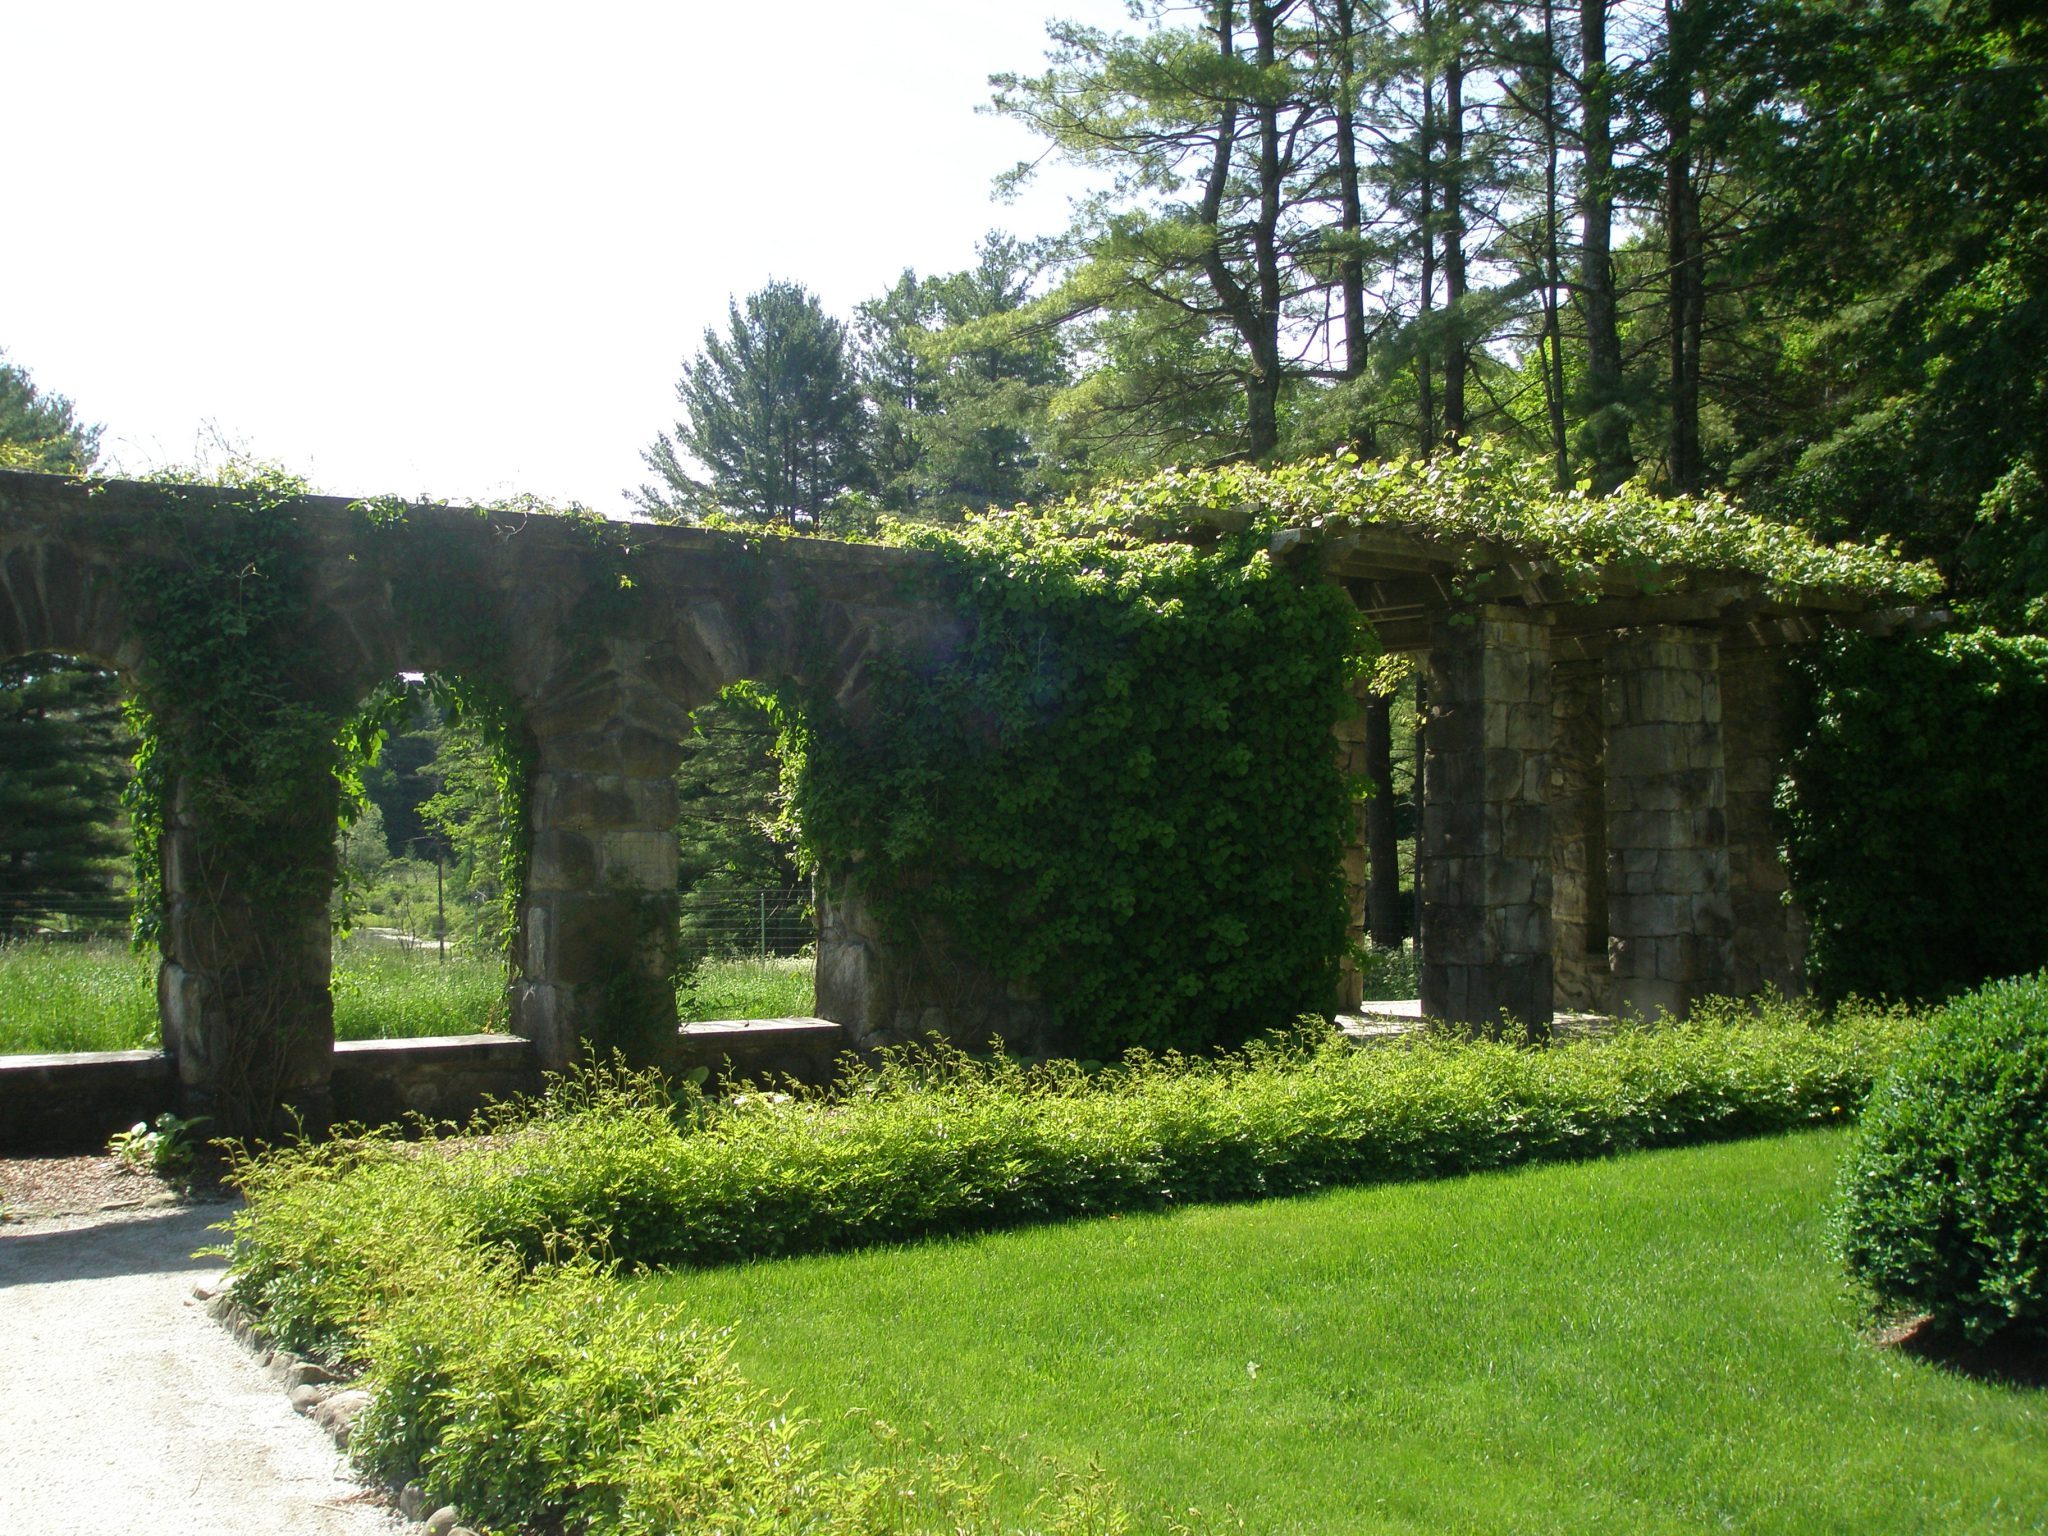 Rustic Pergola in the Walled Garden